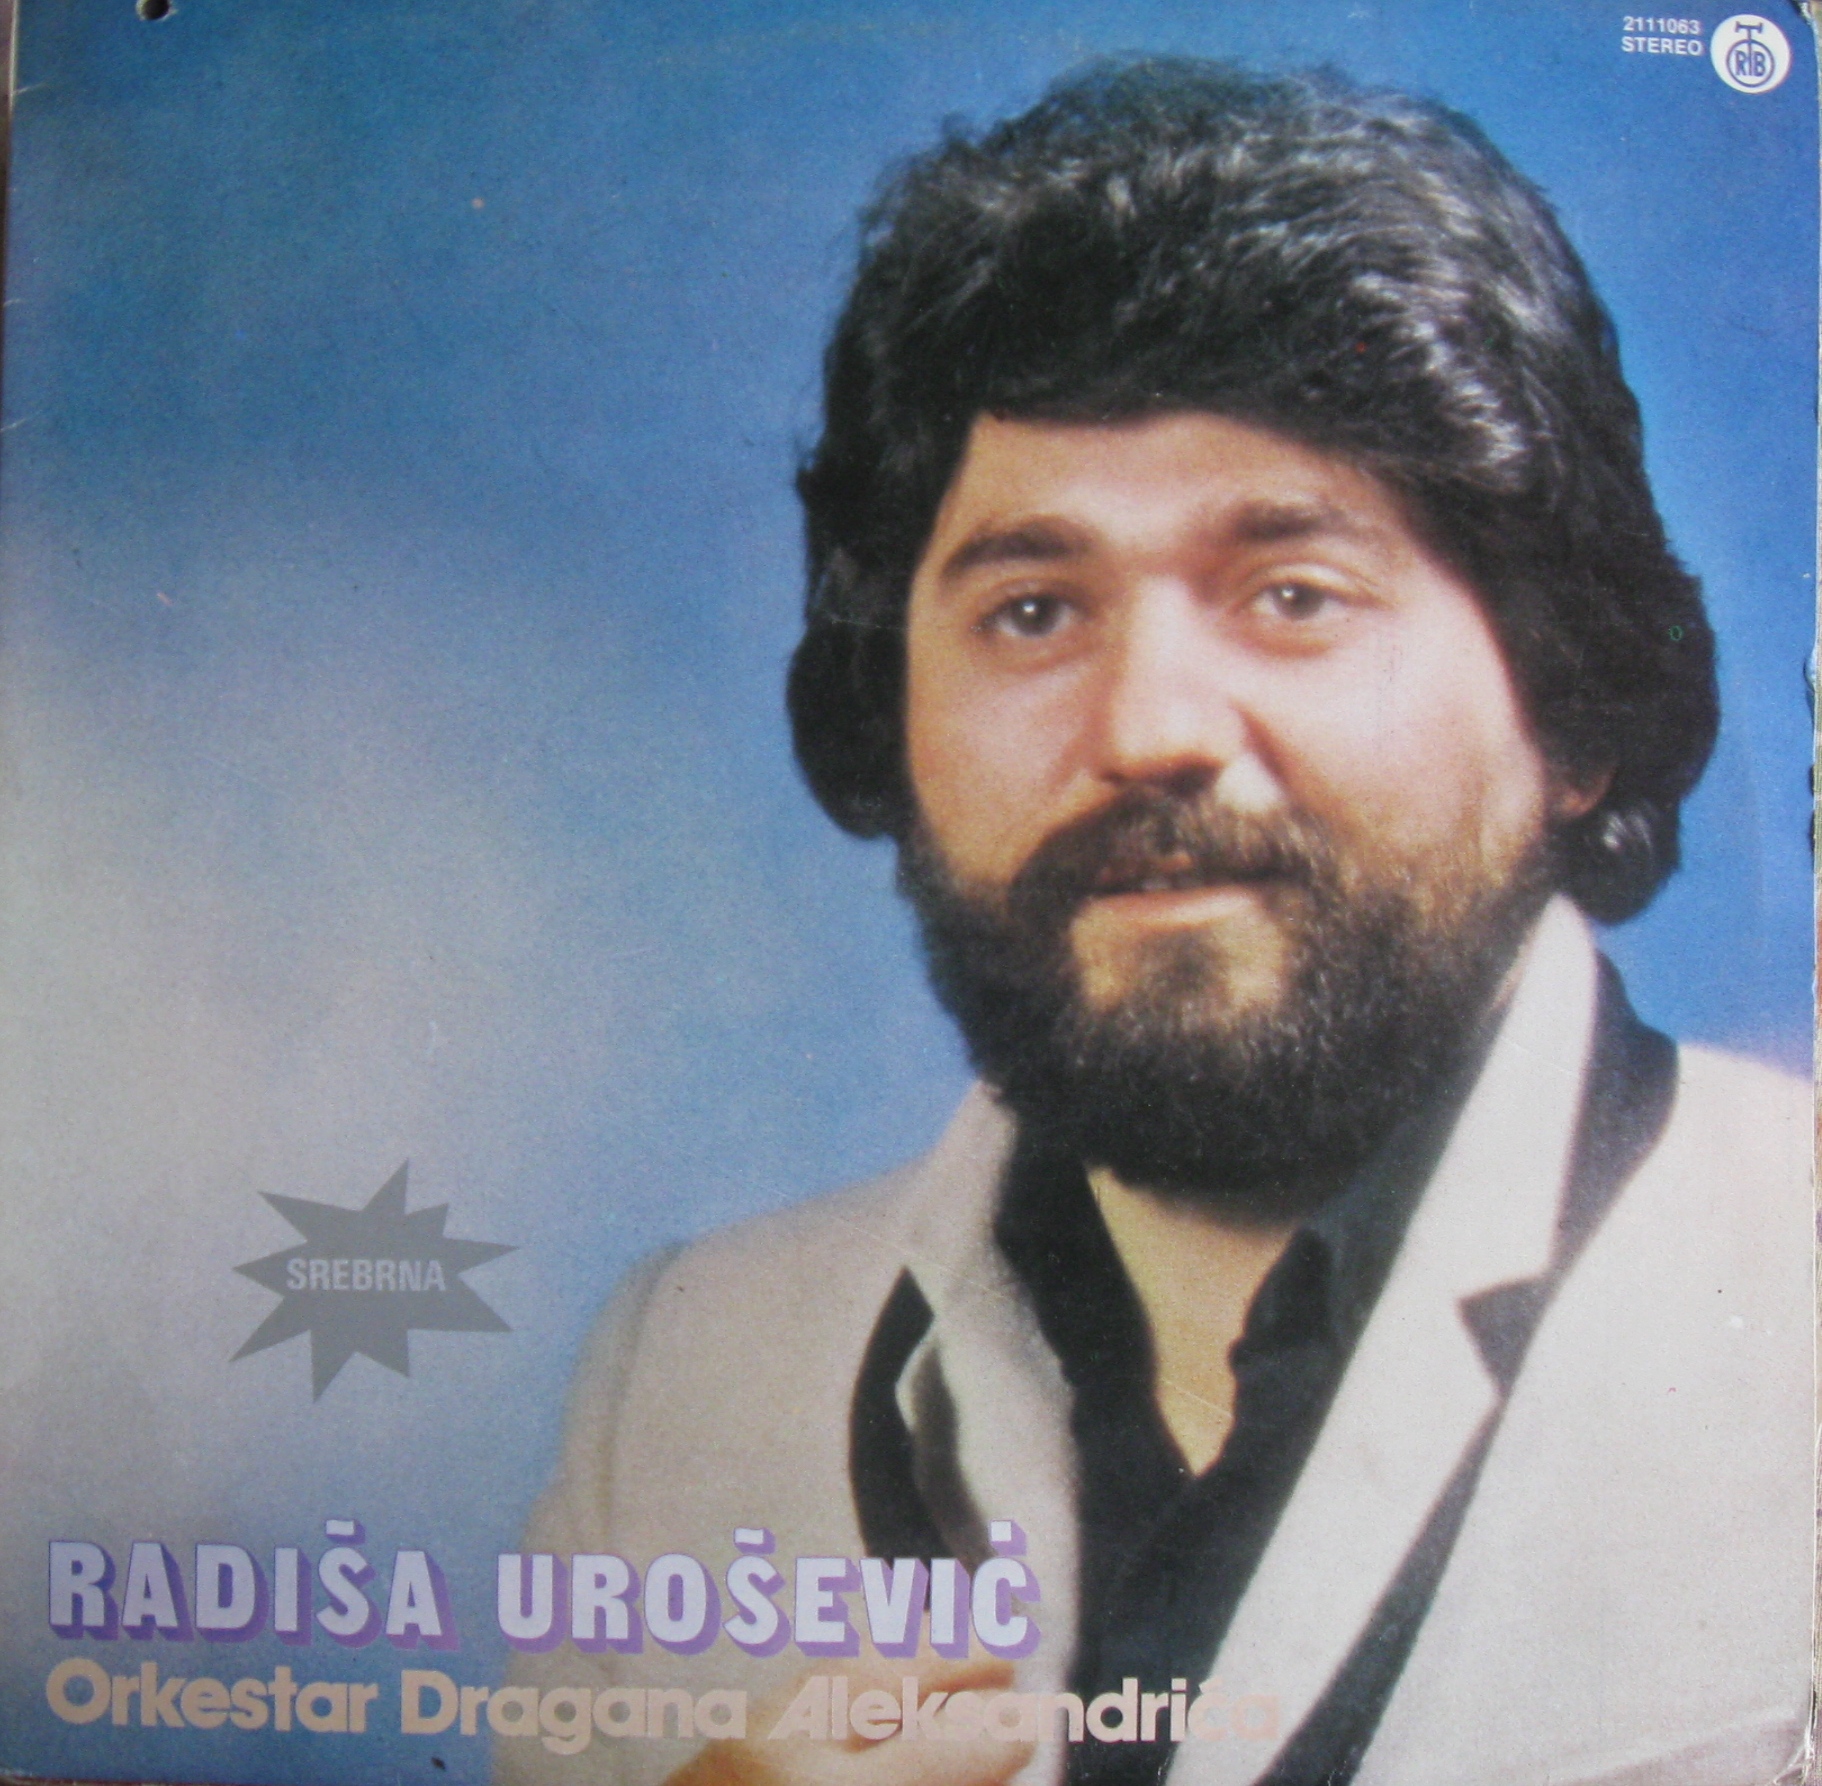 Radisa Urosevic 1982 Radisa Urosevic a